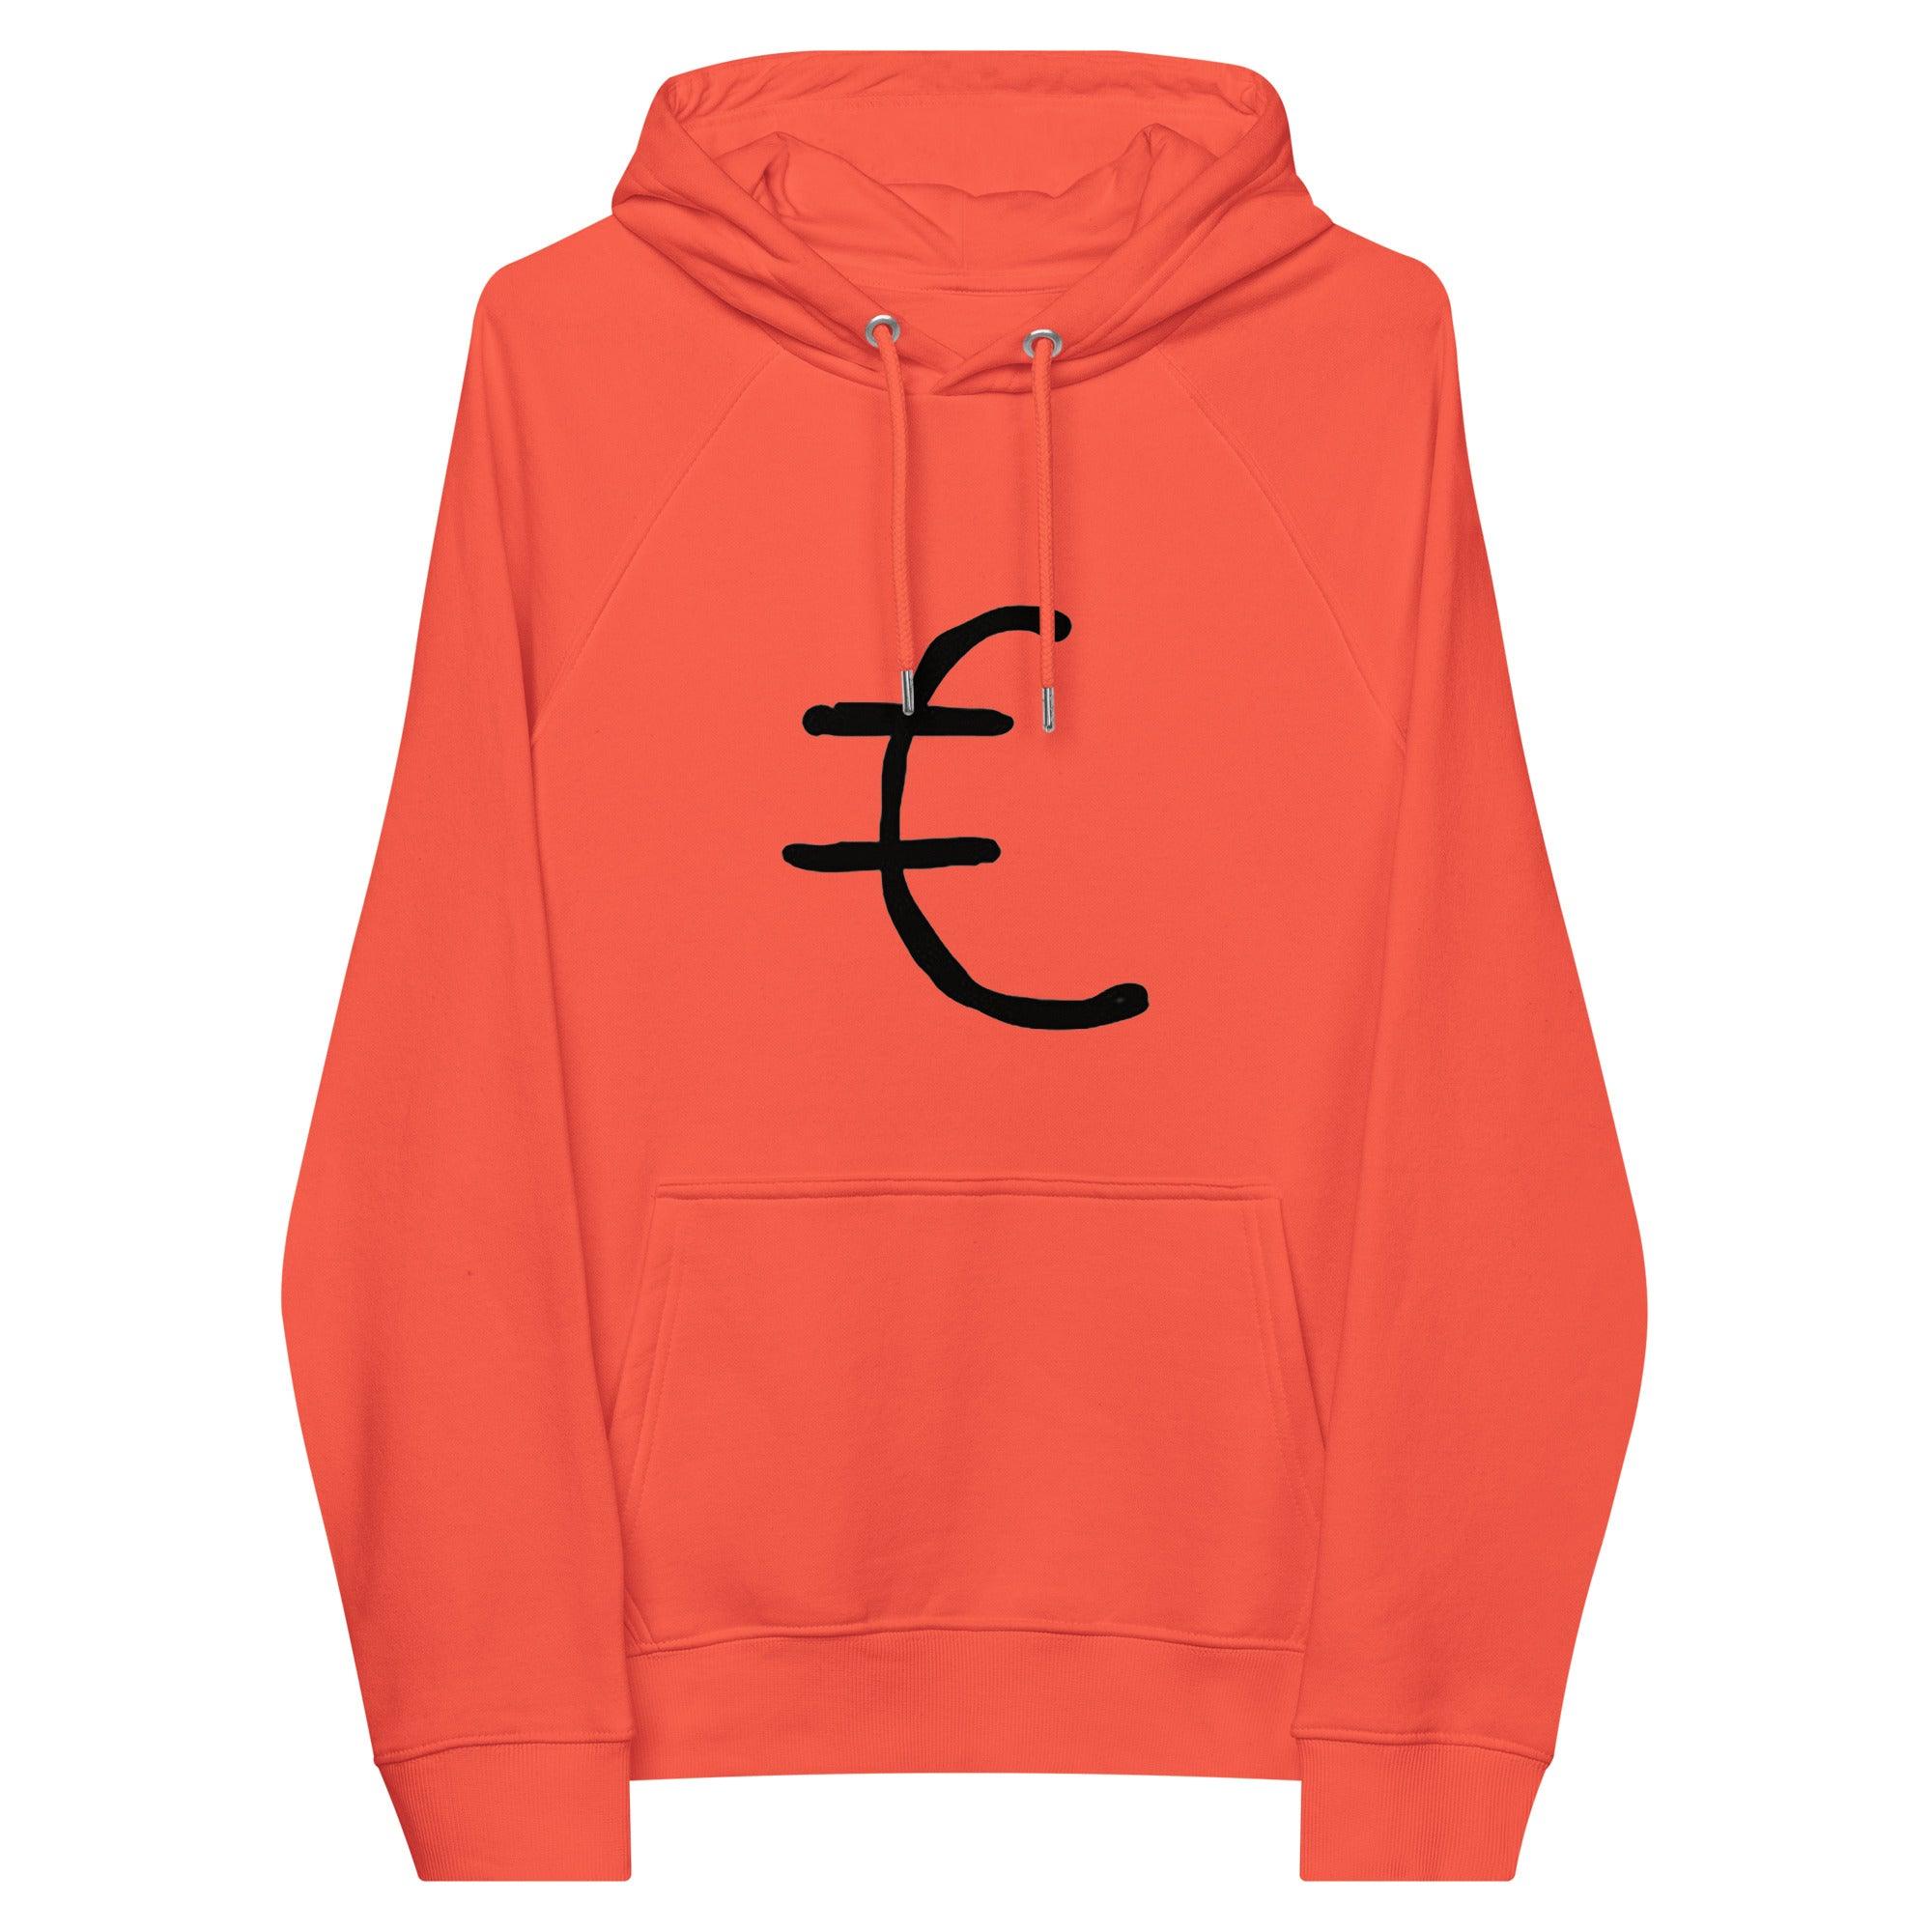 Euro Symbol Pullover Hoodie - InvestmenTees